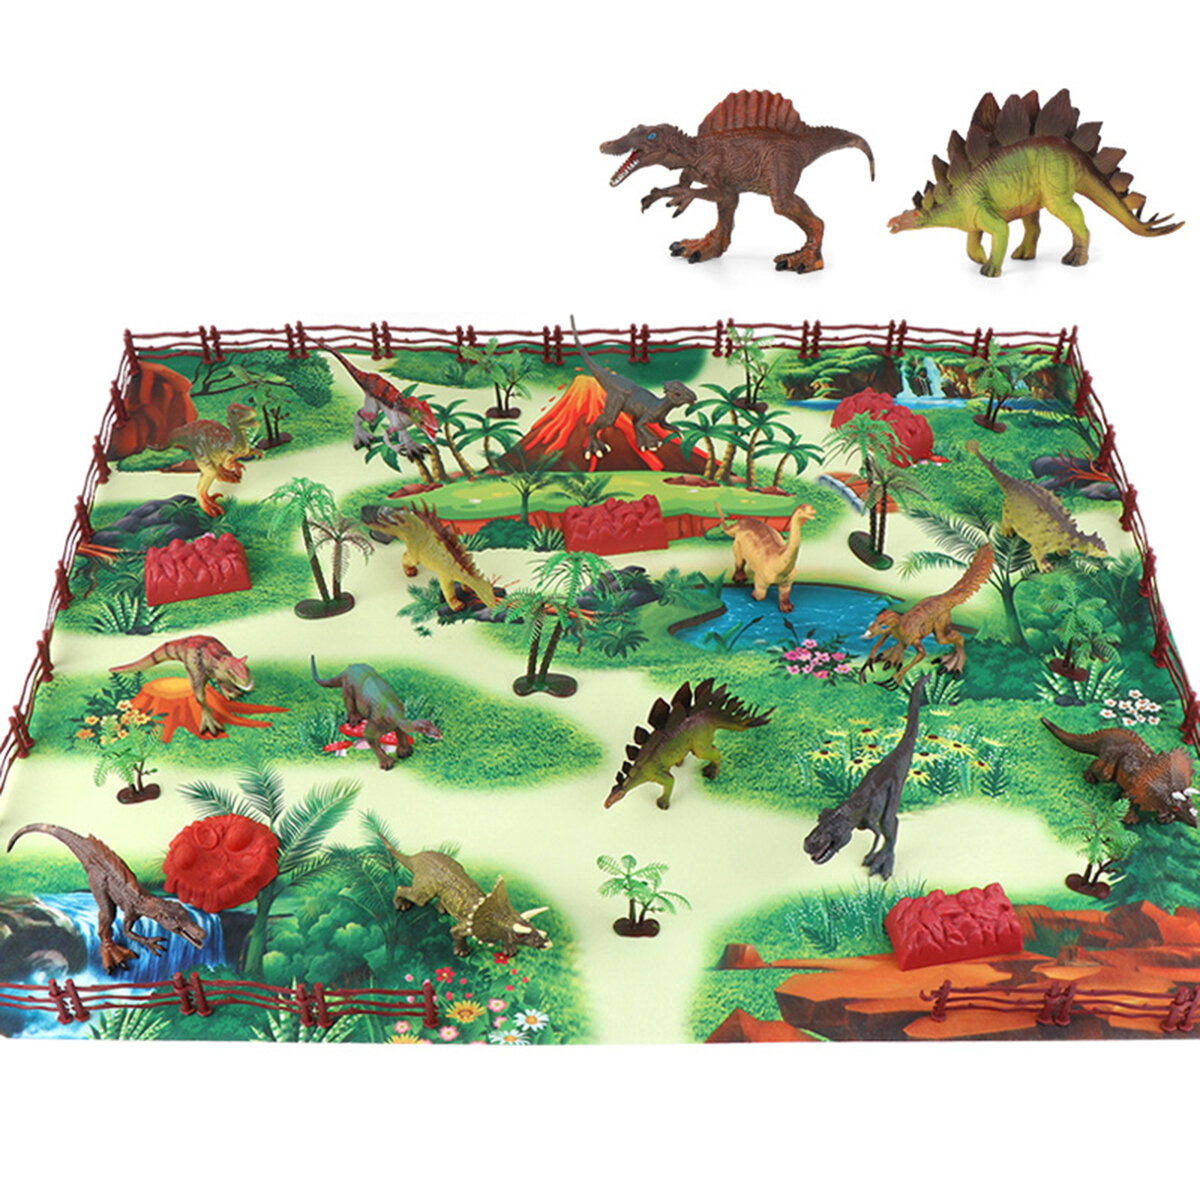 28/33/34/63 / 65Pcs Multi-stijl Diecast Dinosaurussen Model Play Set Educatief speelgoed met Speelkl